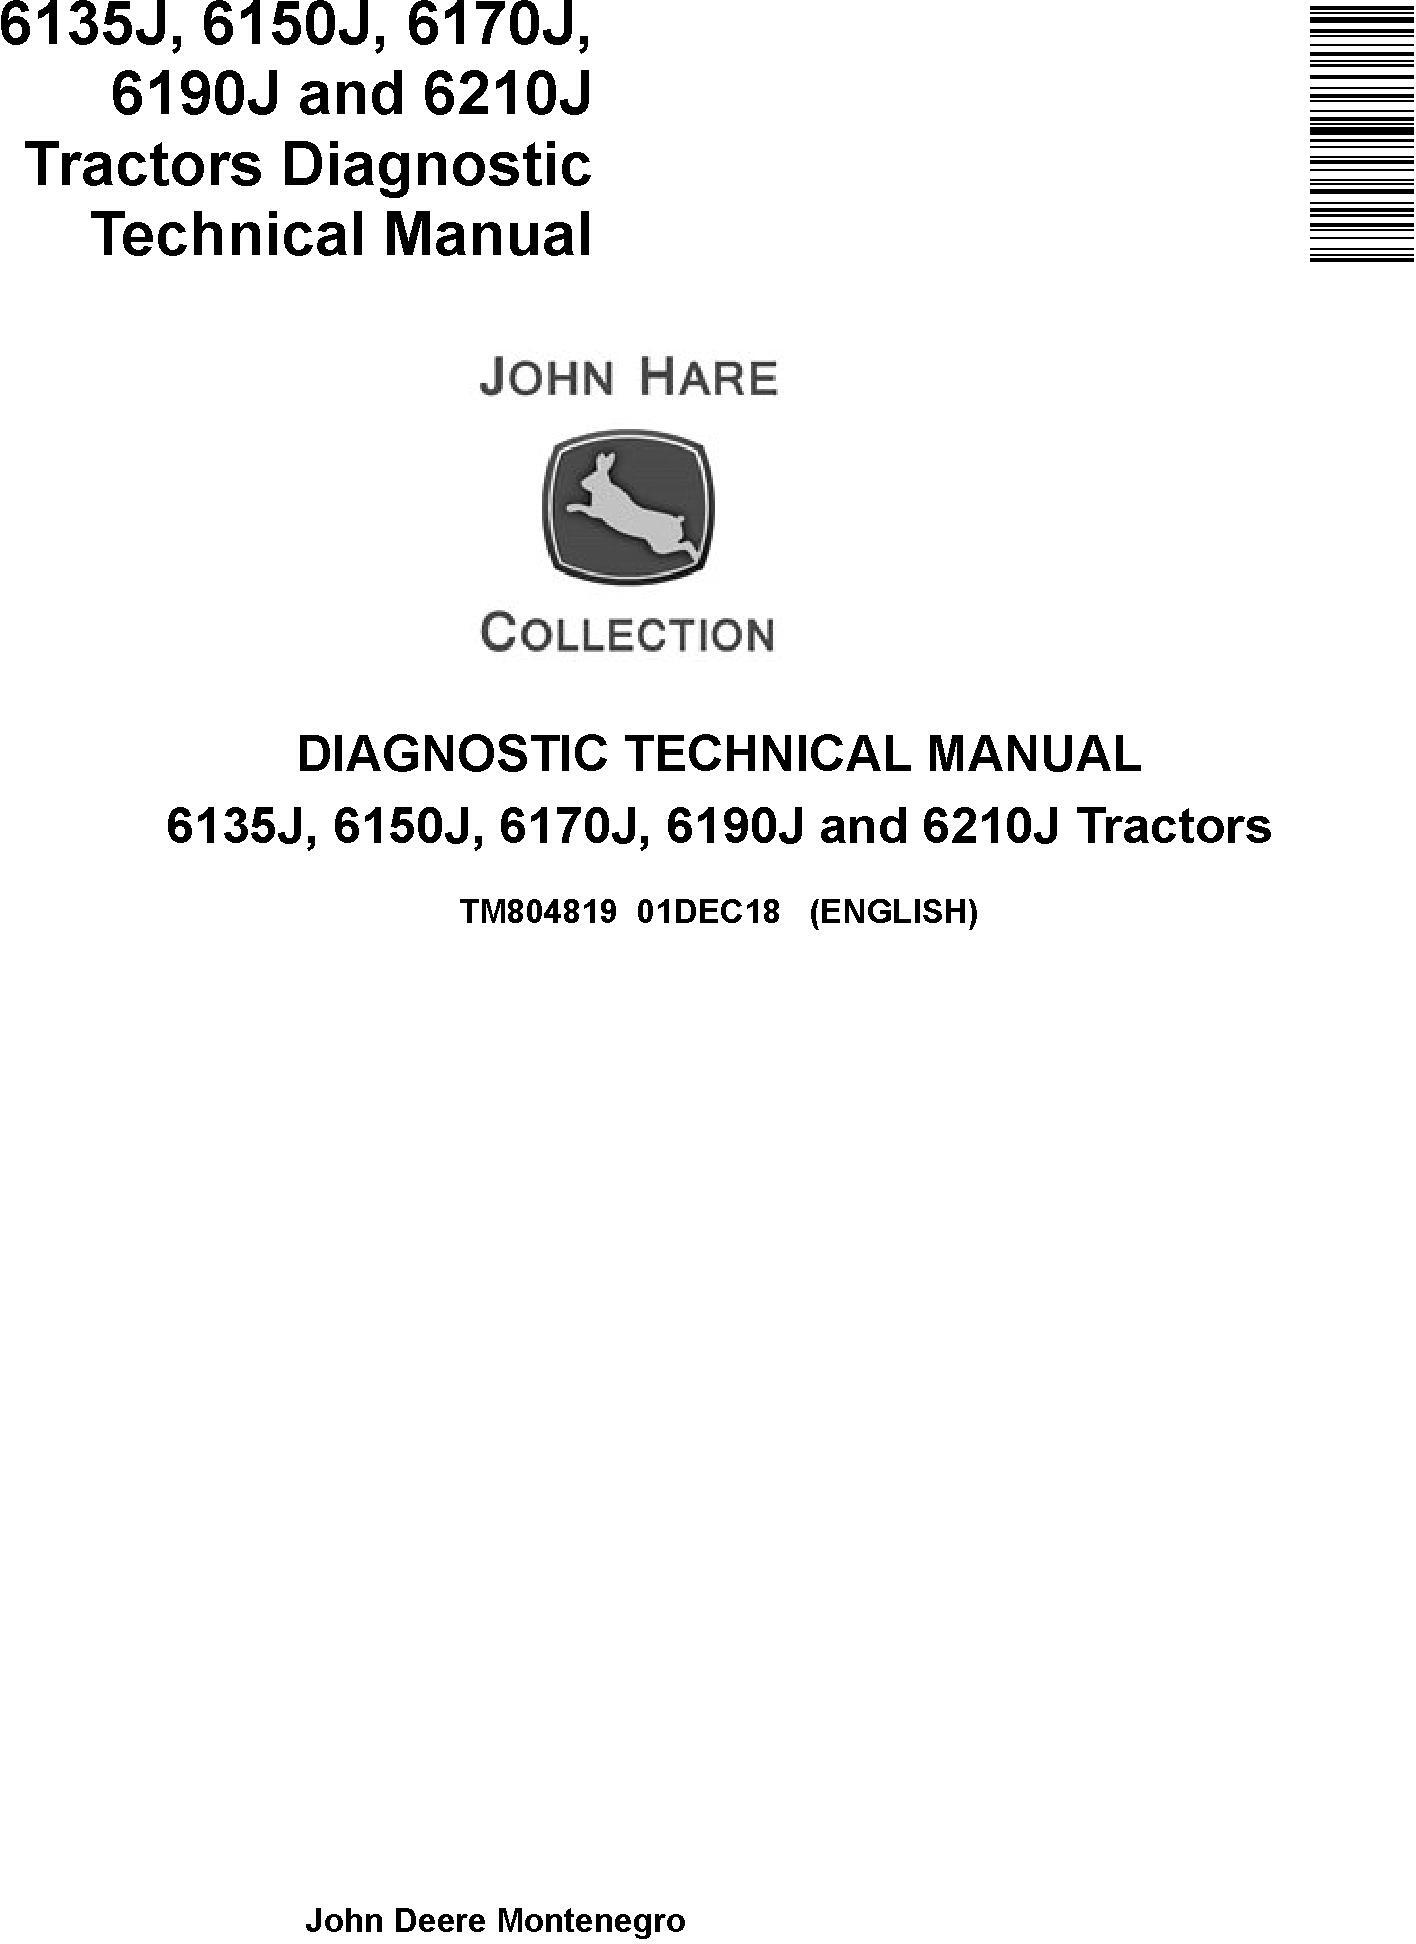 John Deere 6135J, 6150J, 6170J, 6190J, 6210J Tractors Diagnostic Technical Service Manual (TM804819) - 19142